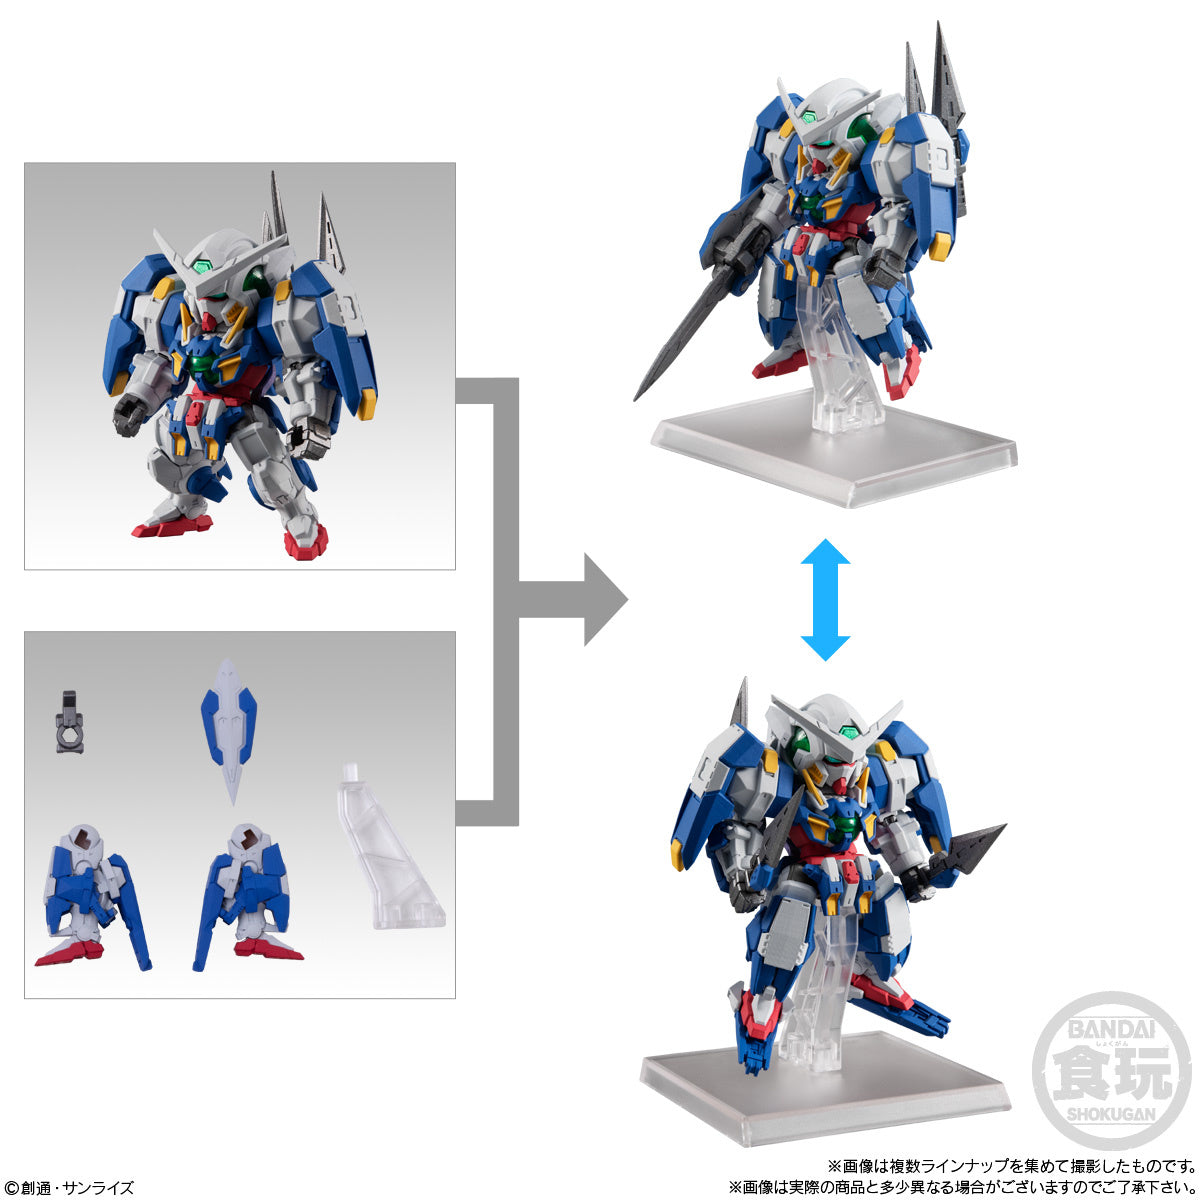 Bandai - Shokugan - Mobile Suit Gundam - FW Gundam Converge 